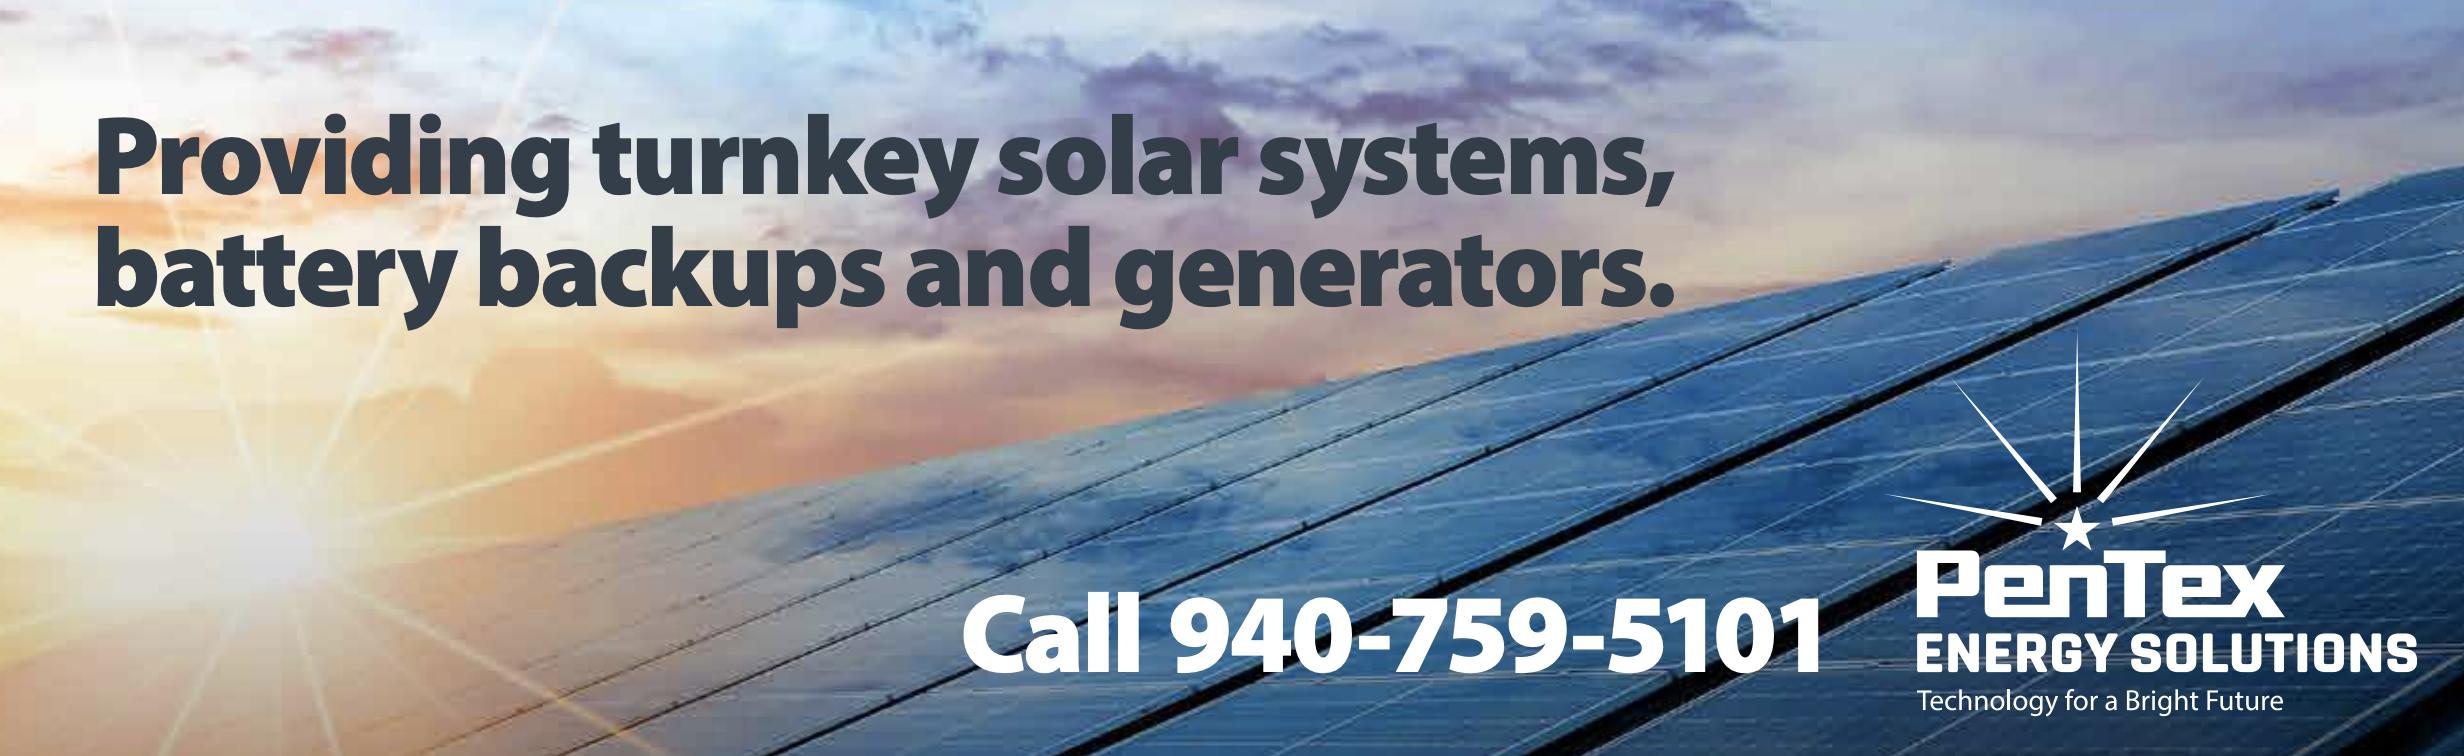 PenTex Energy Solutions Banner